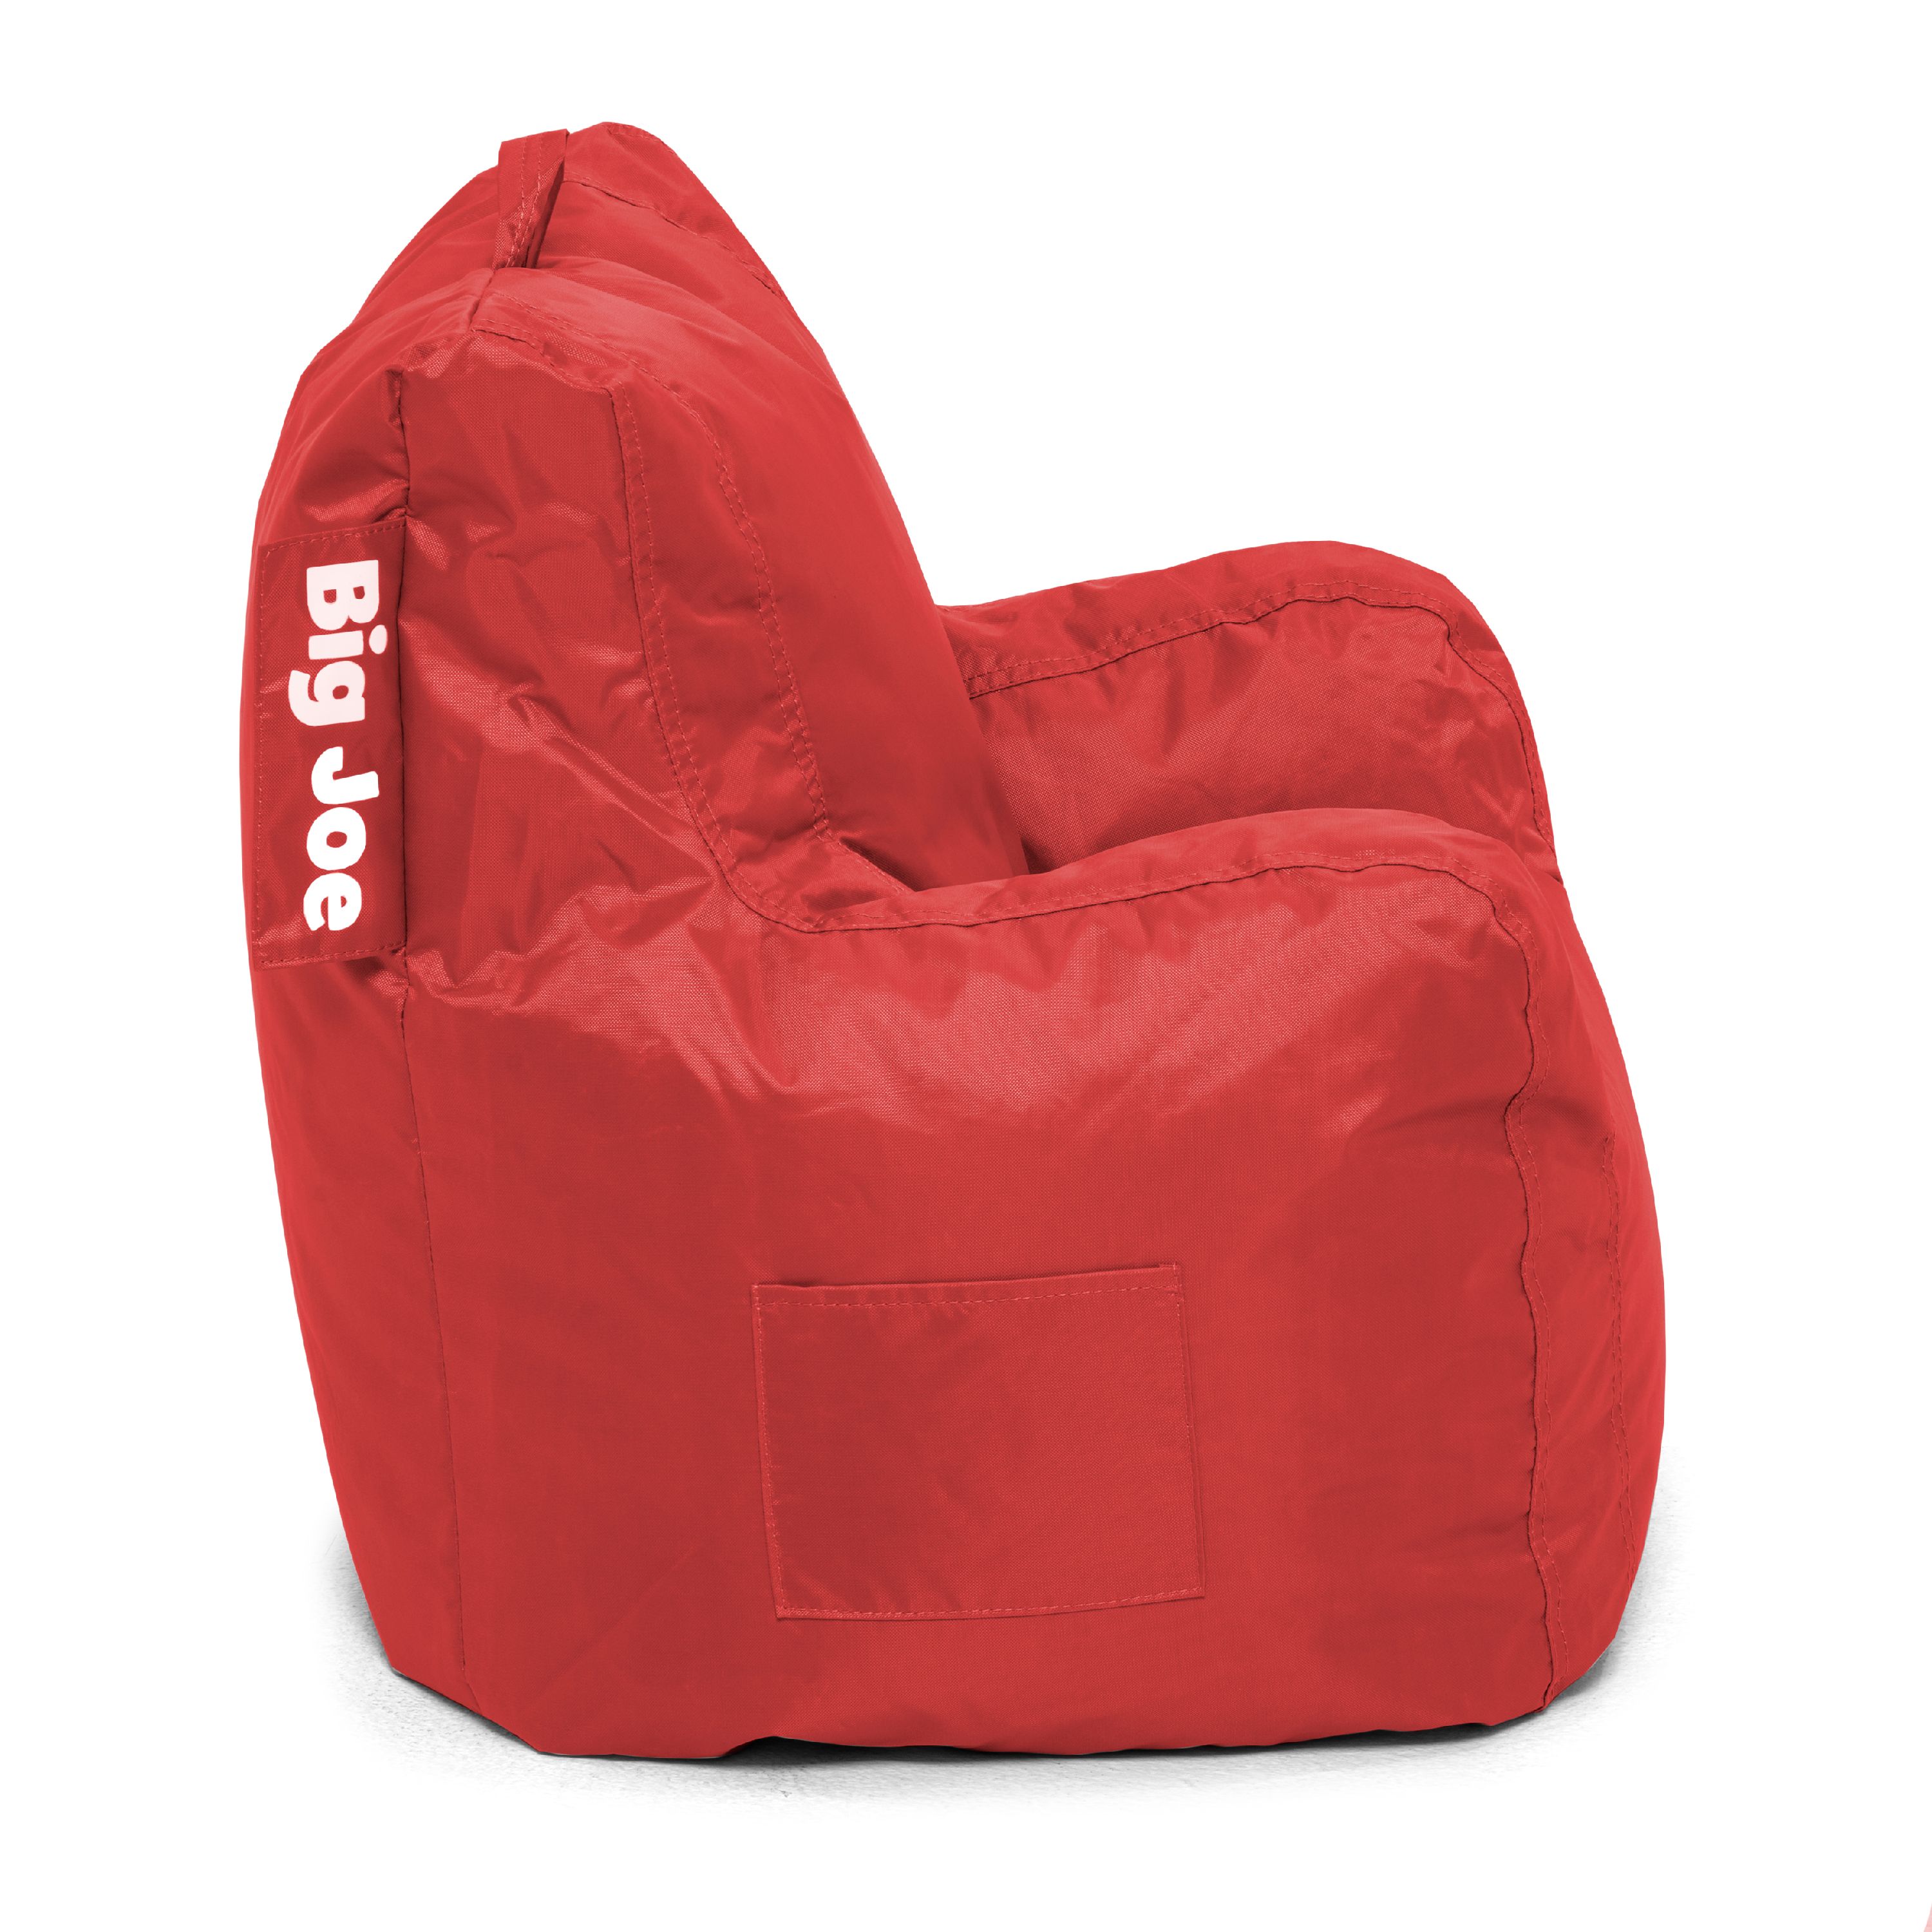 Big Joe Cuddle Bean Bag Chair, Multiple Colors - image 3 of 6